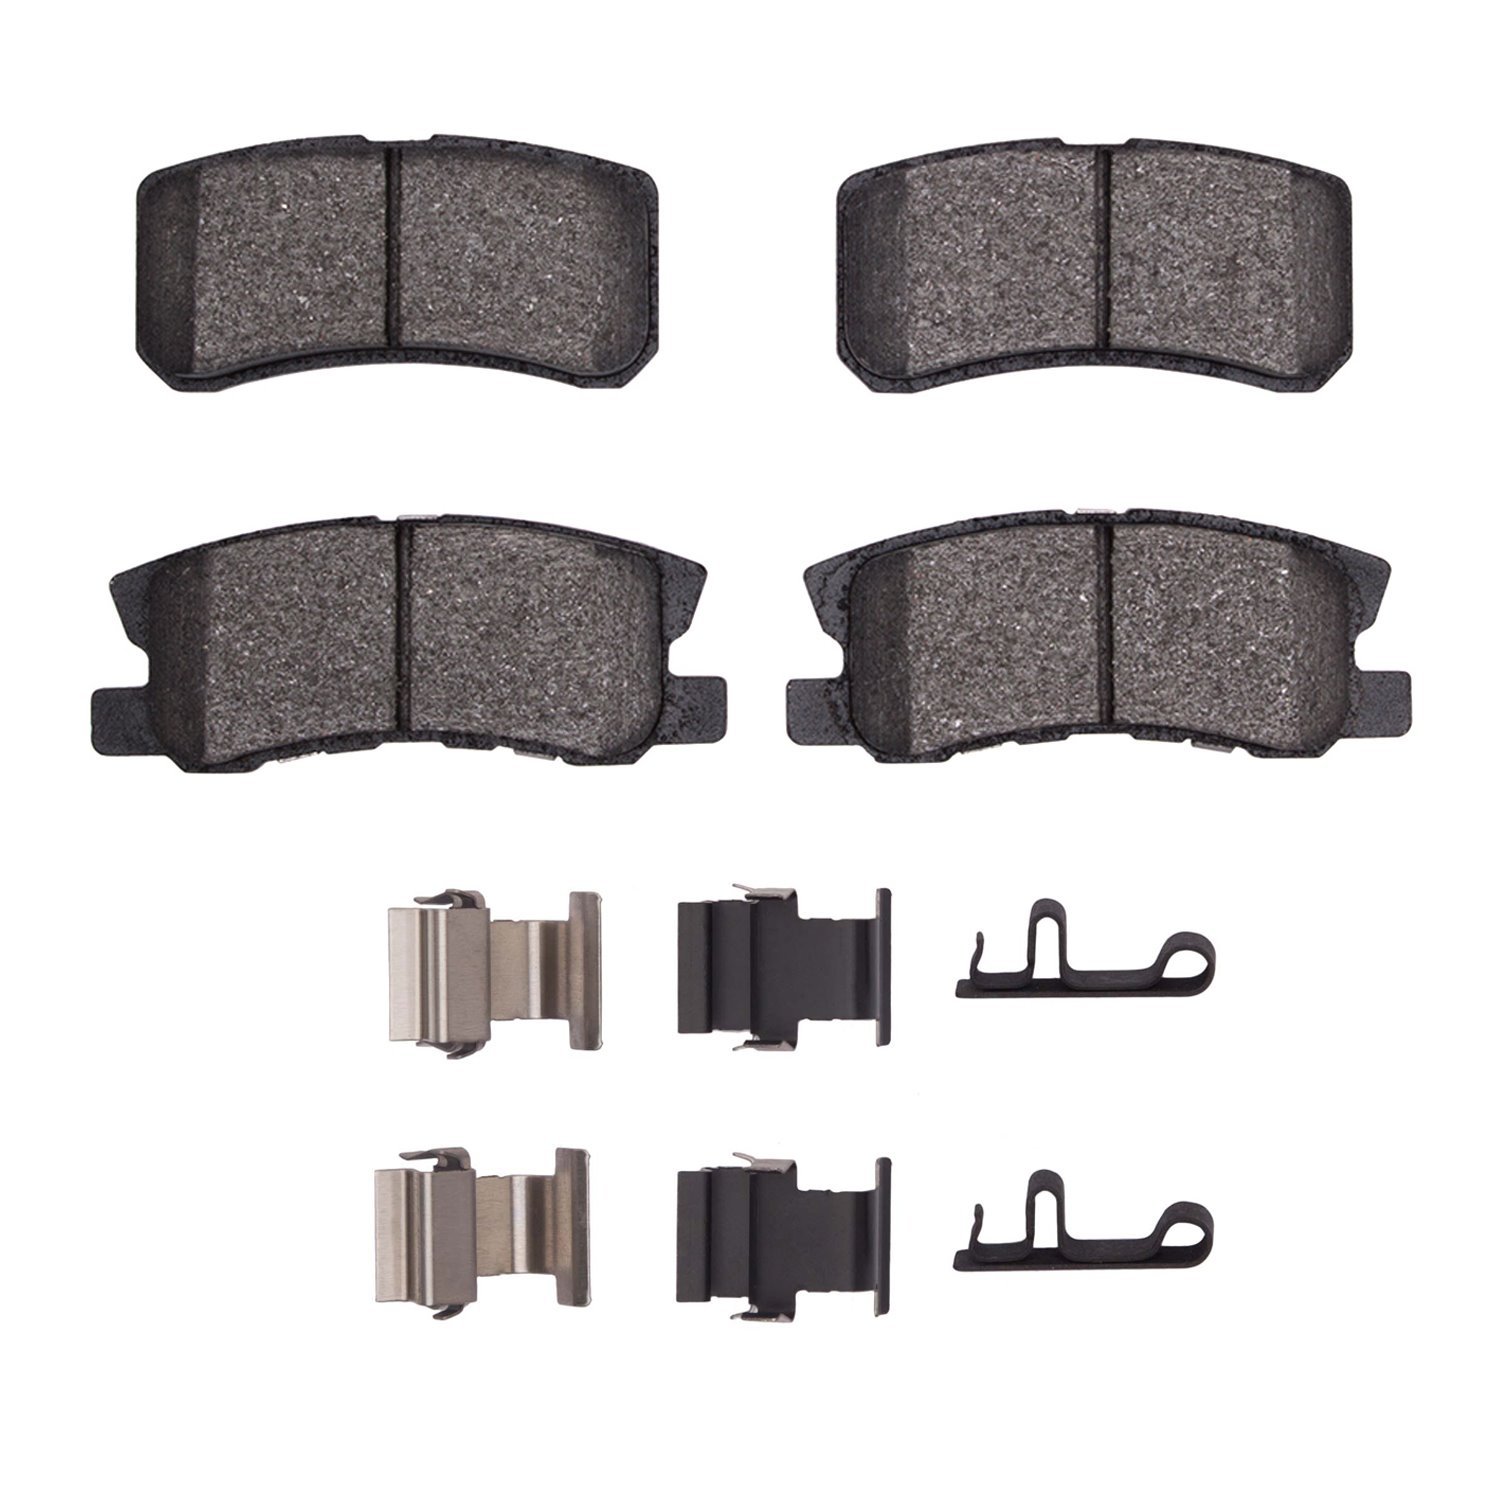 Semi-Metallic Brake Pads & Hardware Kit, 2000-2017 Fits Multiple Makes/Models, Position: Rear